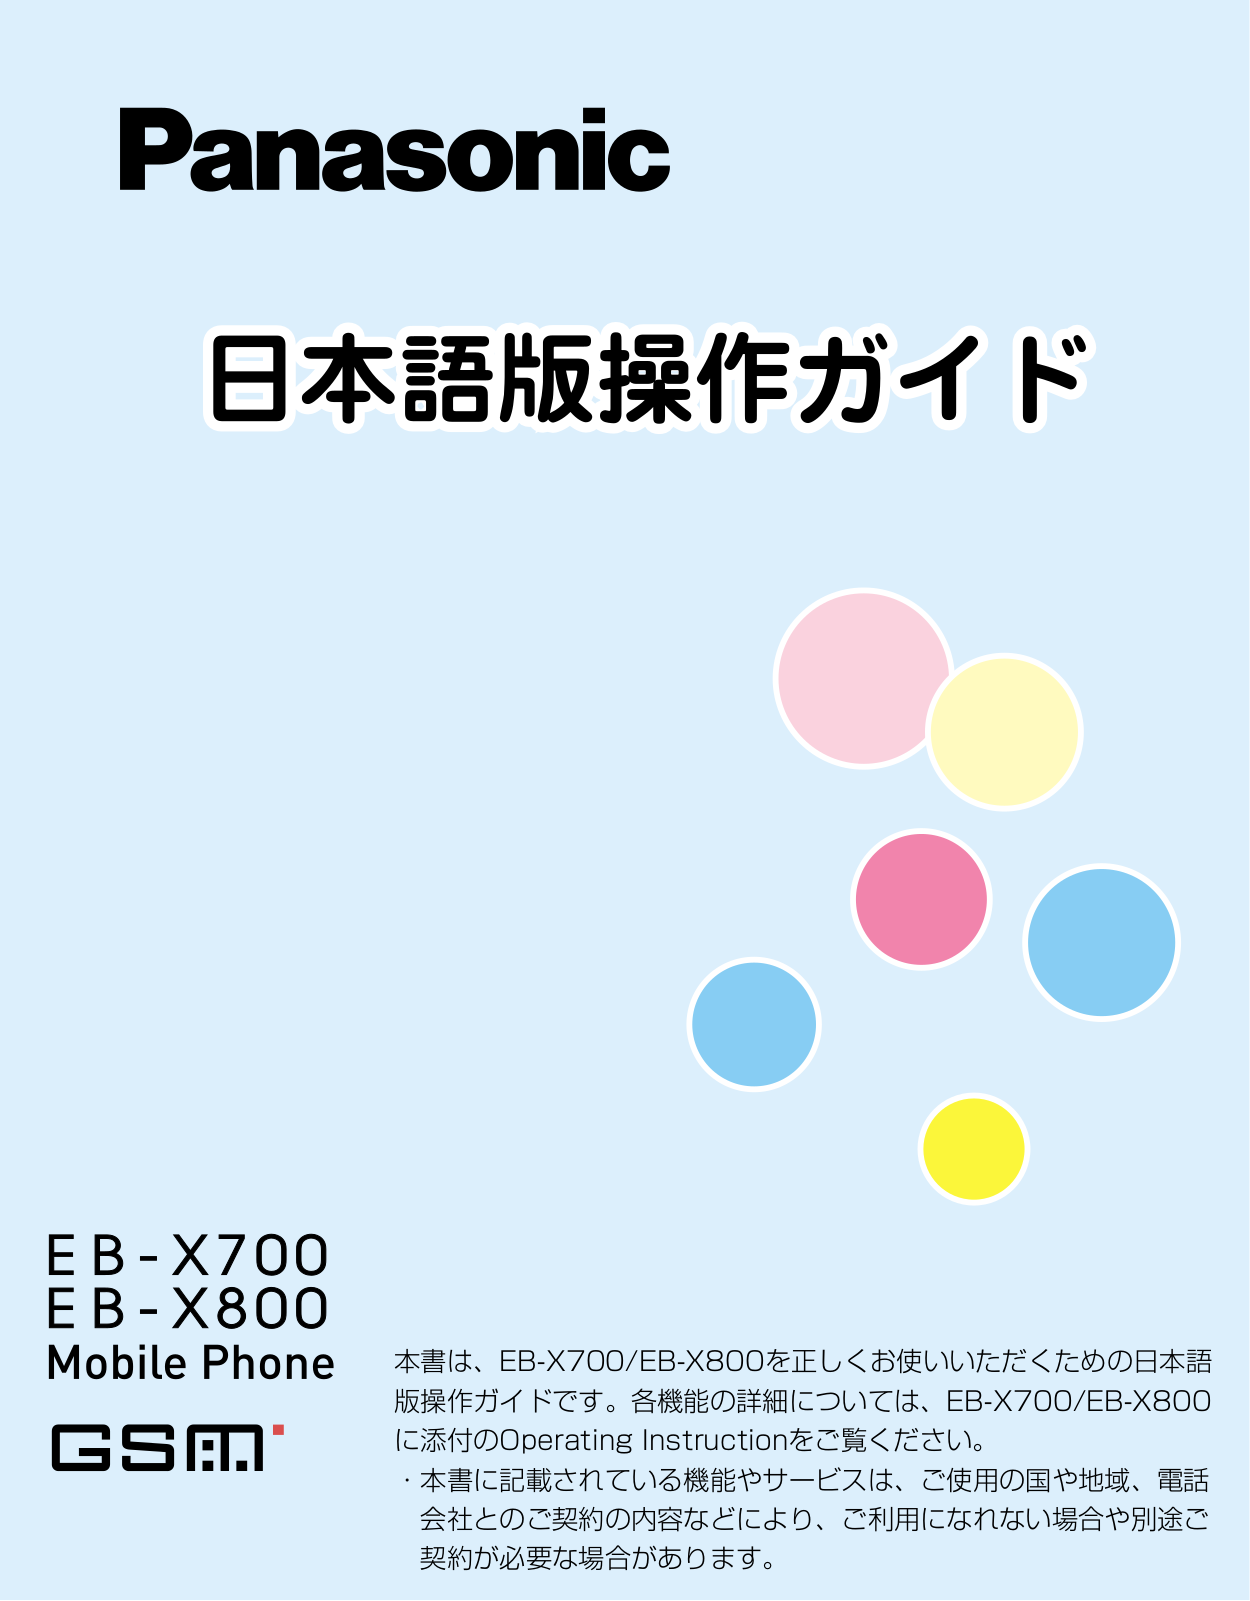 Panasonic X700part2, X700part1, X800 User Manual